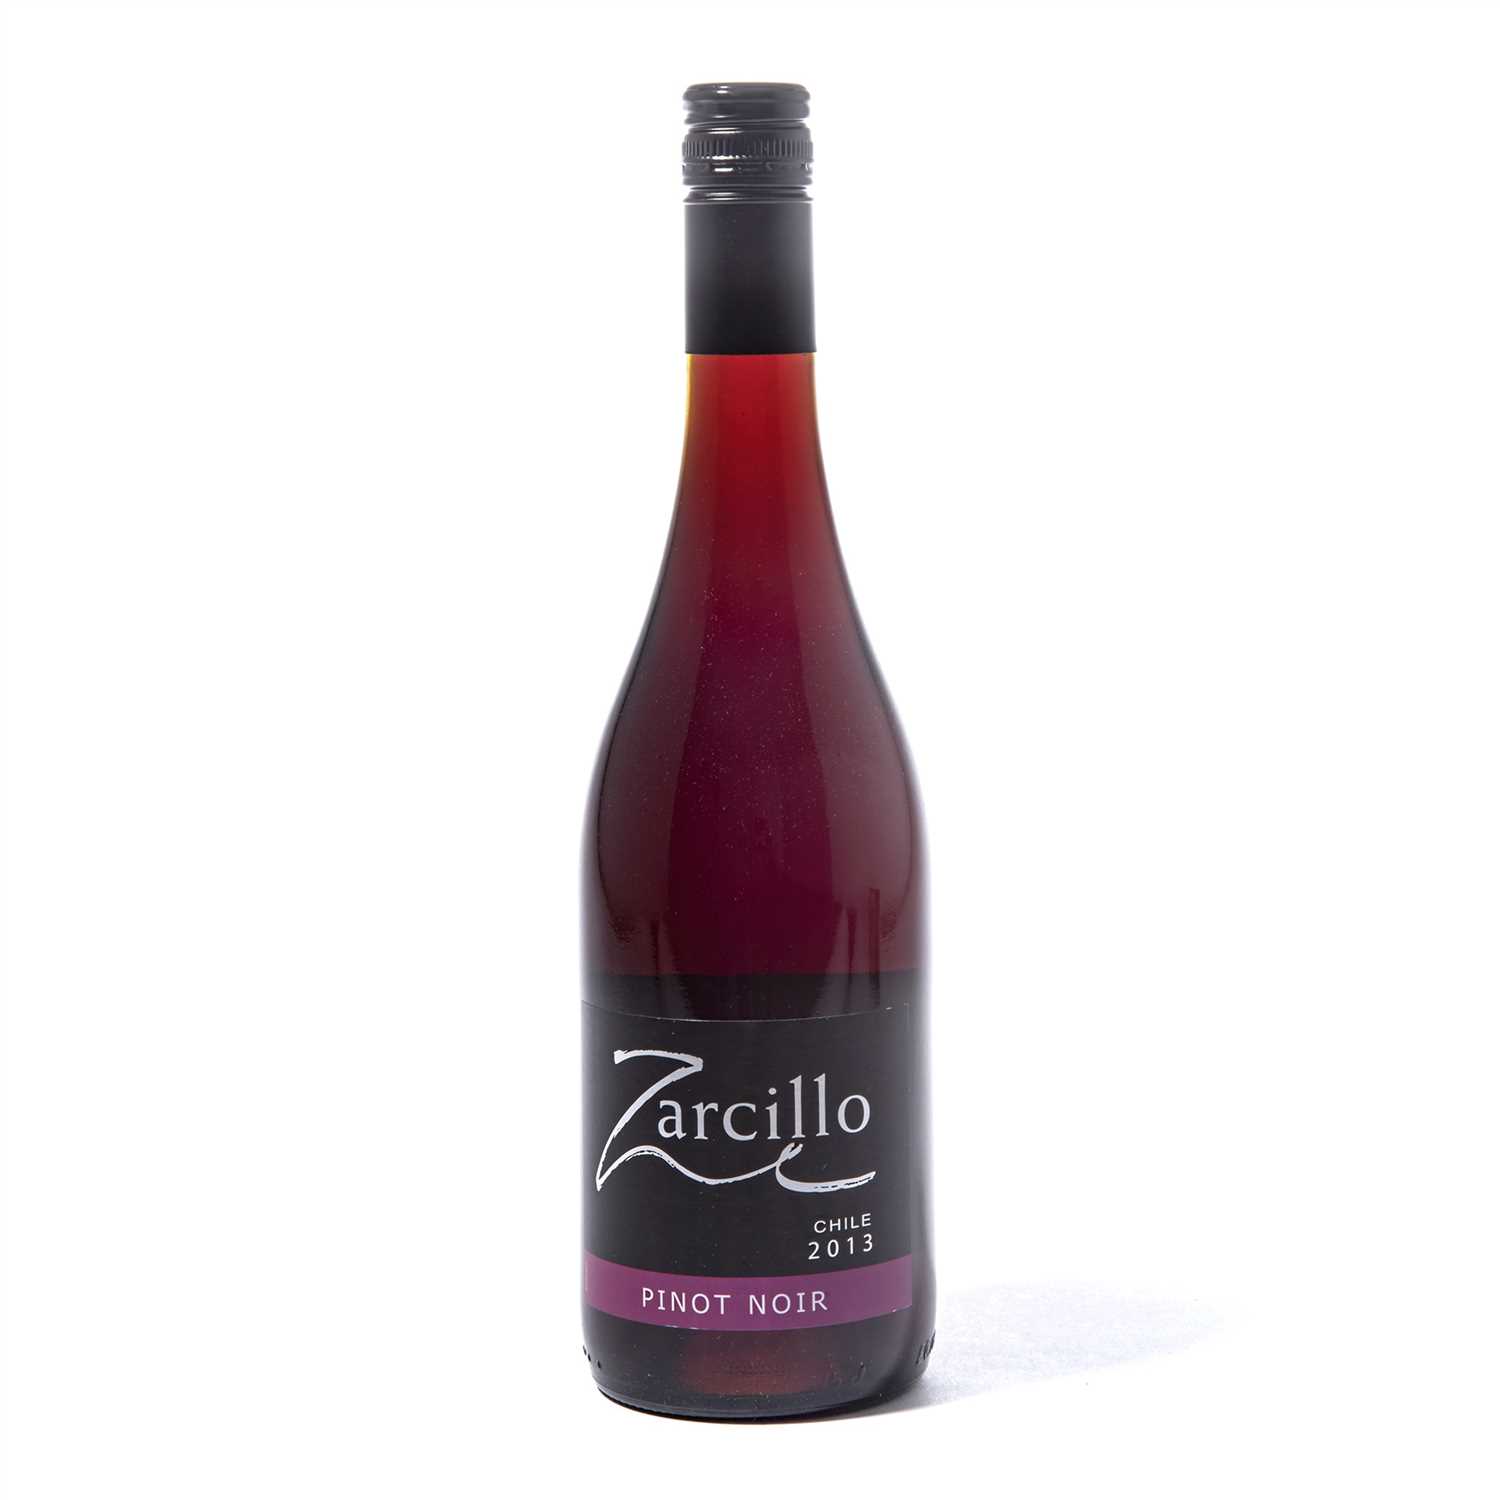 Lot 186 - 2013 Zarcillo Pinot Noir